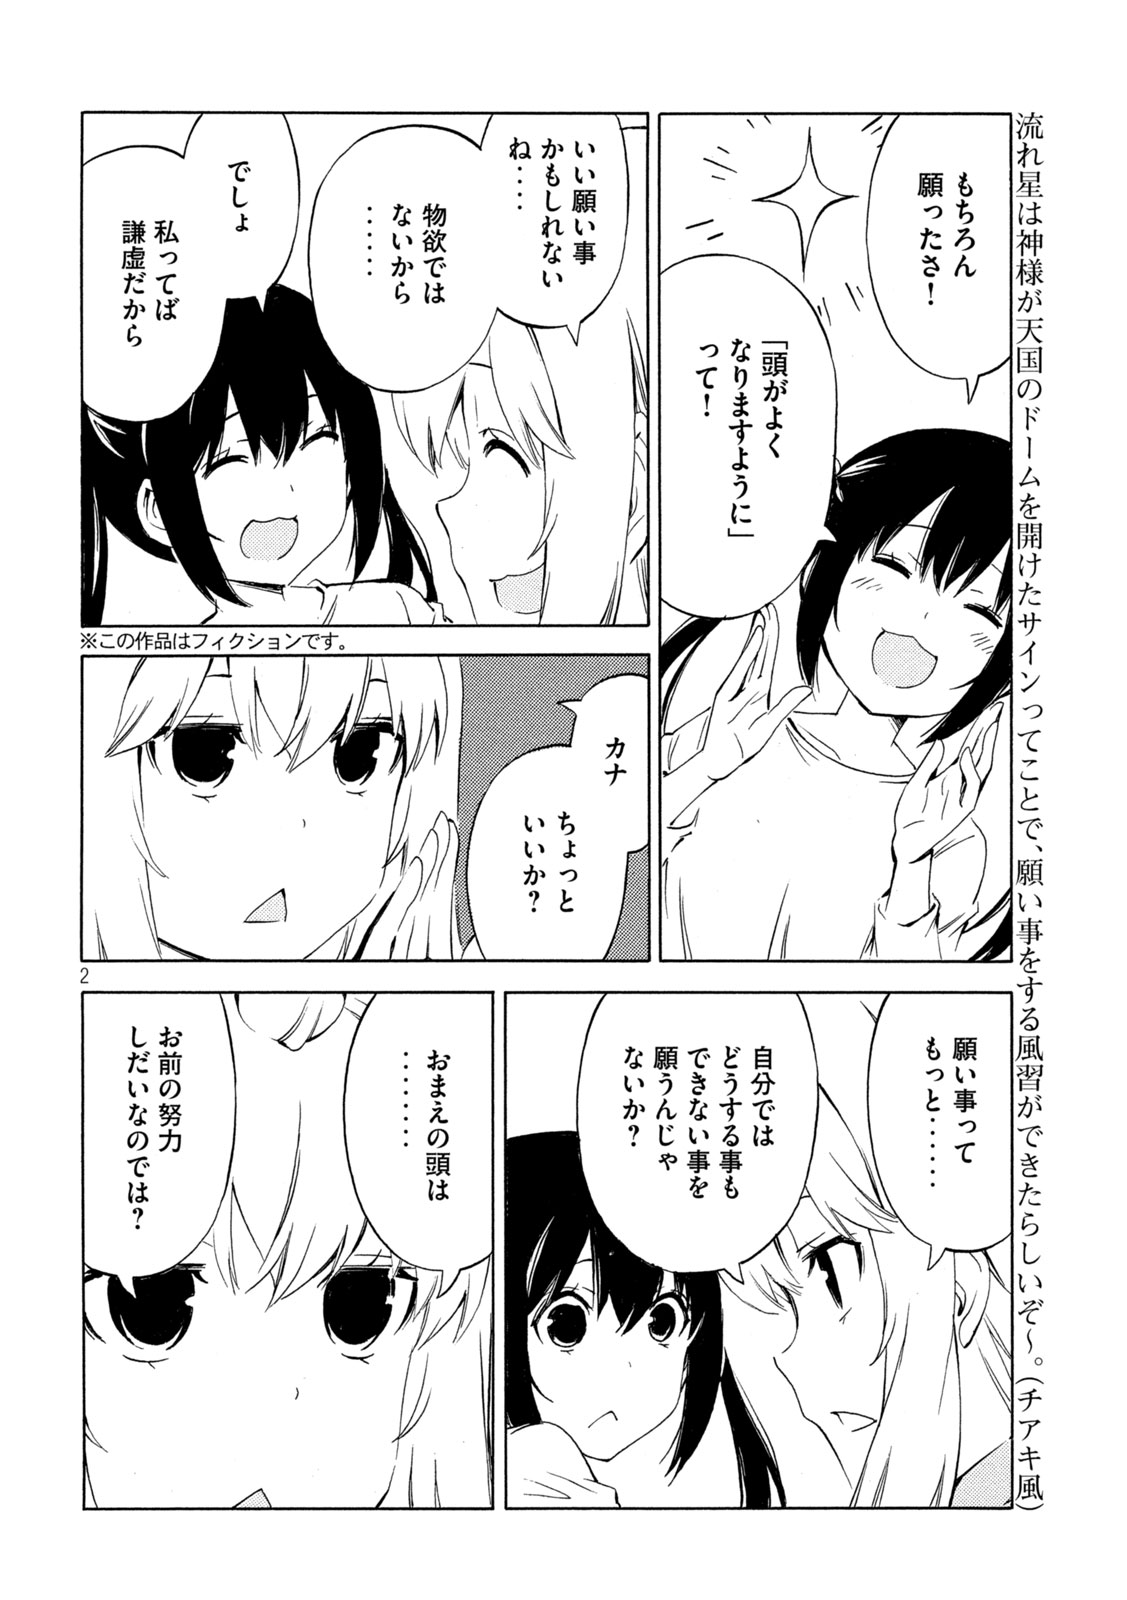 Minami-ke - Chapter 481 - Page 2